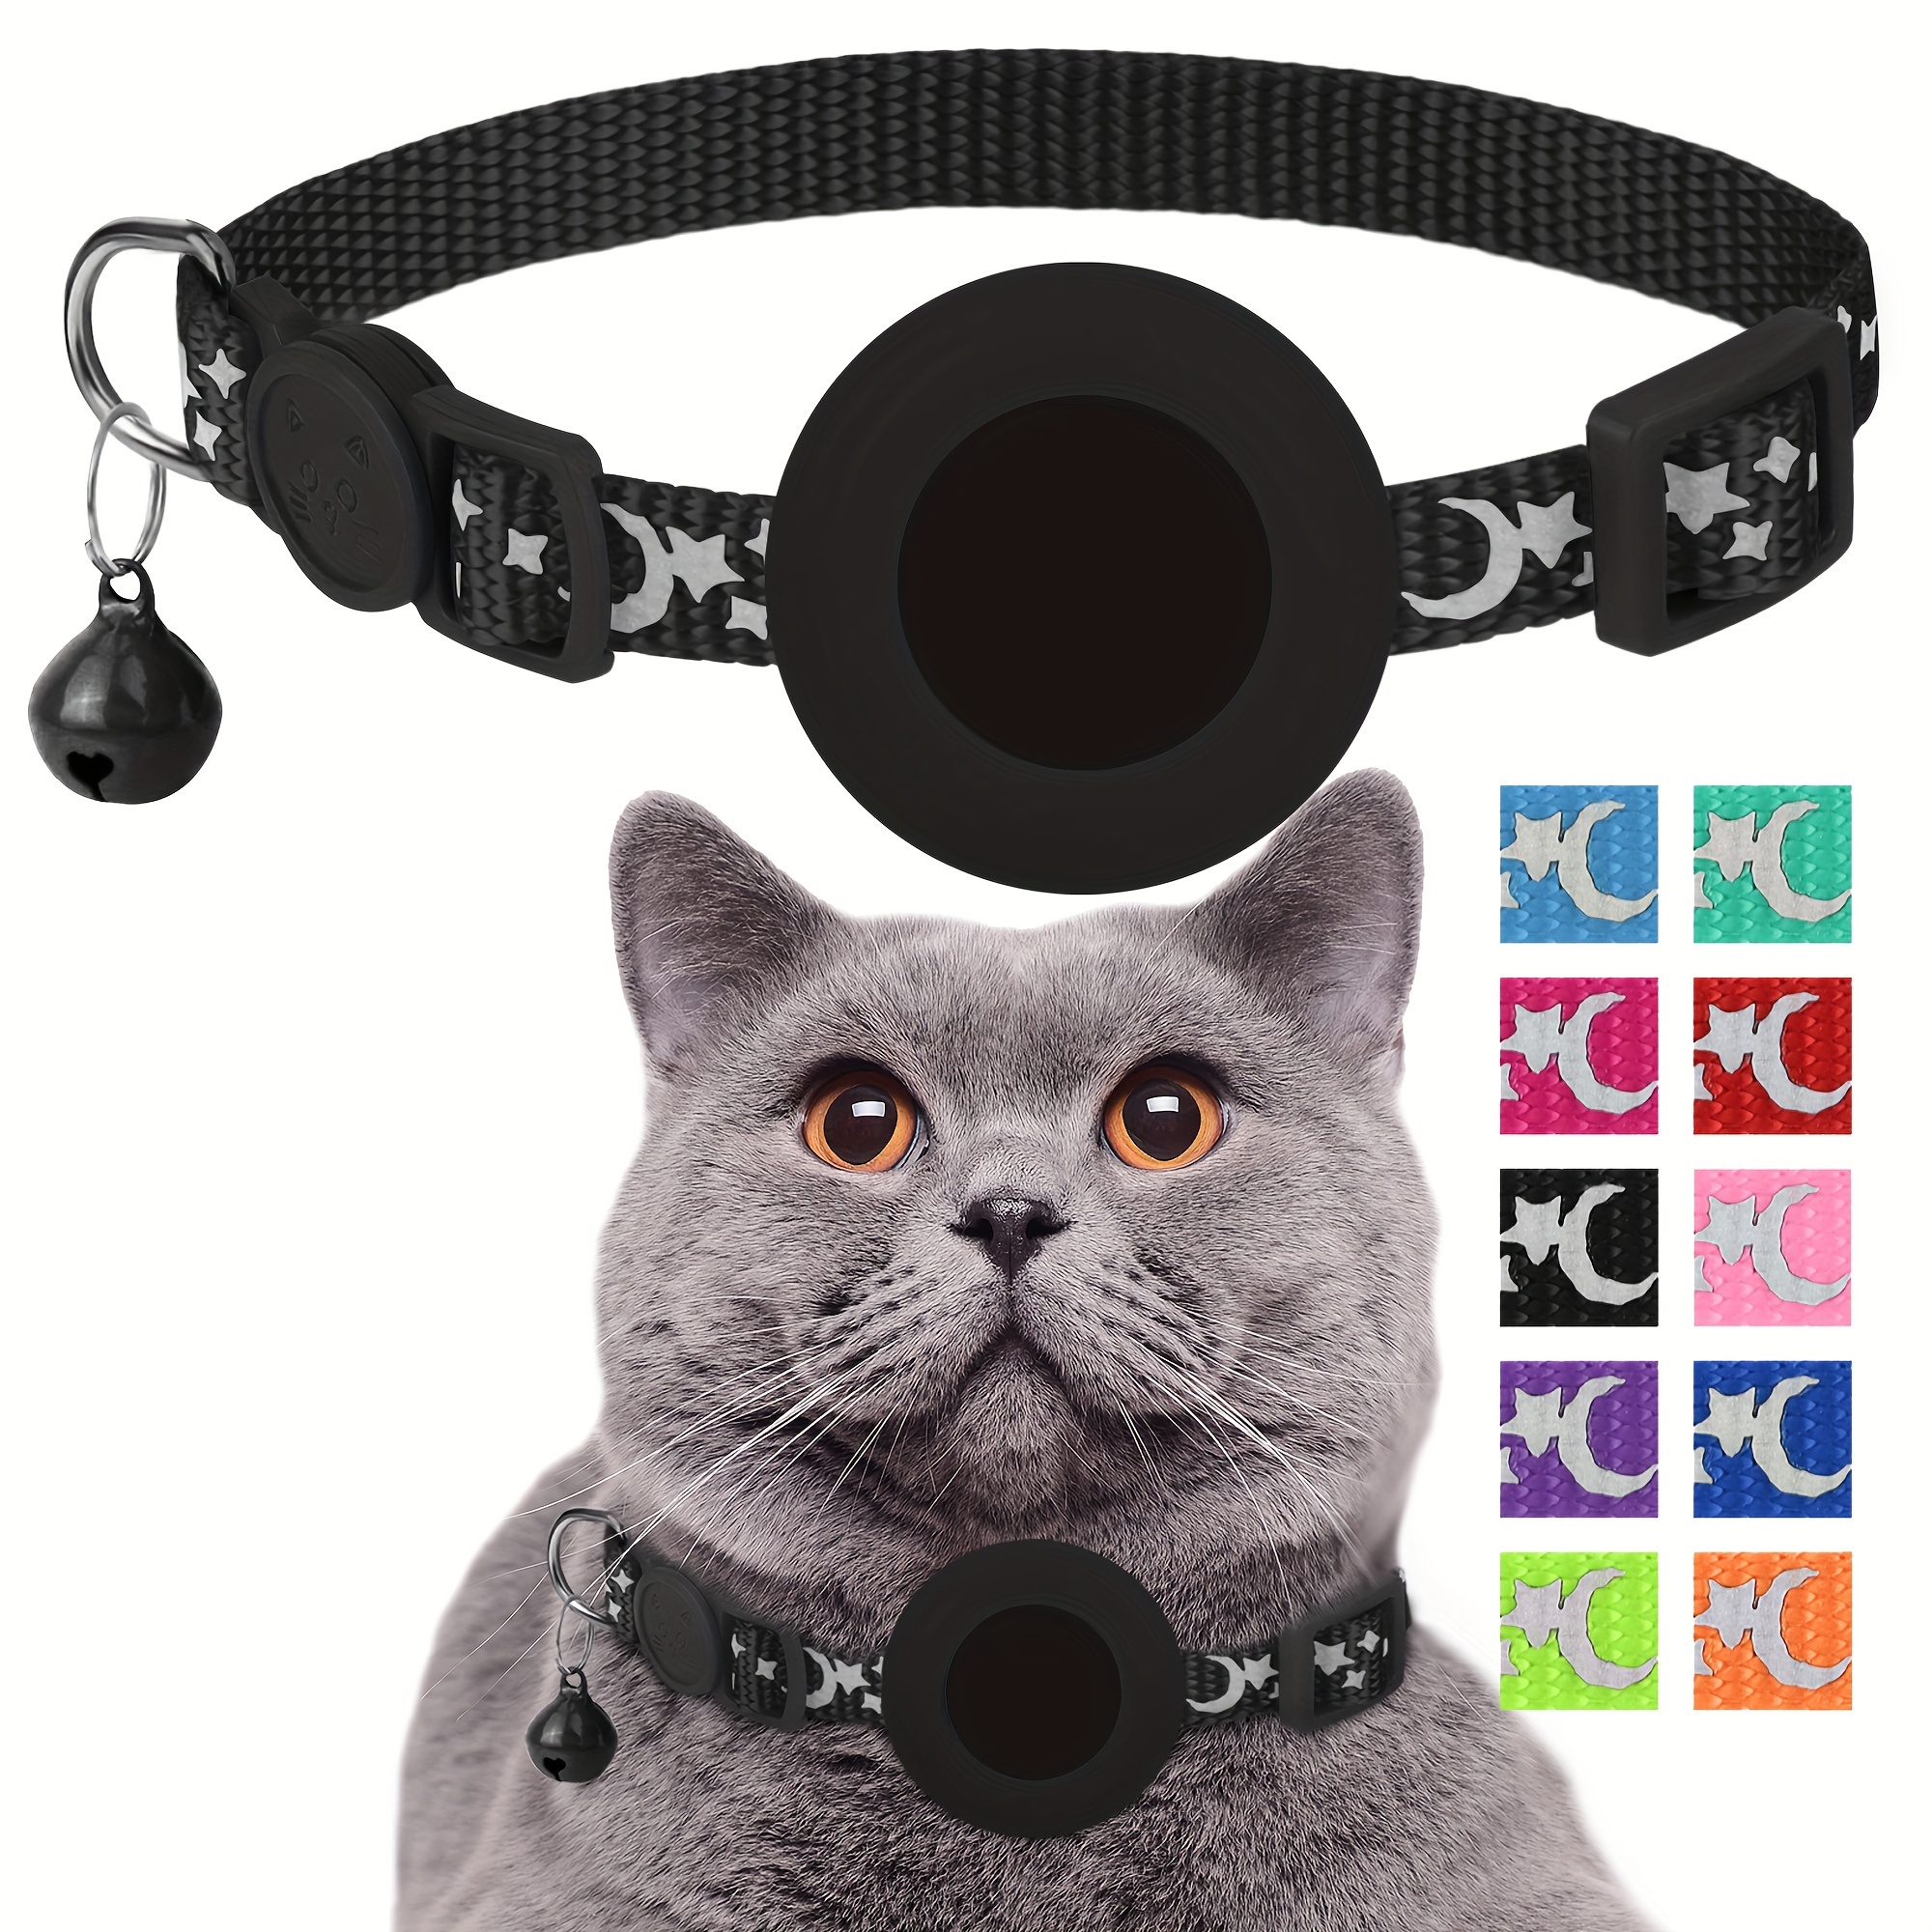  FEEYAR - Collar para gatos AirTag mejorado, collar de gato con  GPS integrado con soporte para AirTag y campana [negro], banda elástica de  seguridad, collares de gato para niñas, niños, gatos